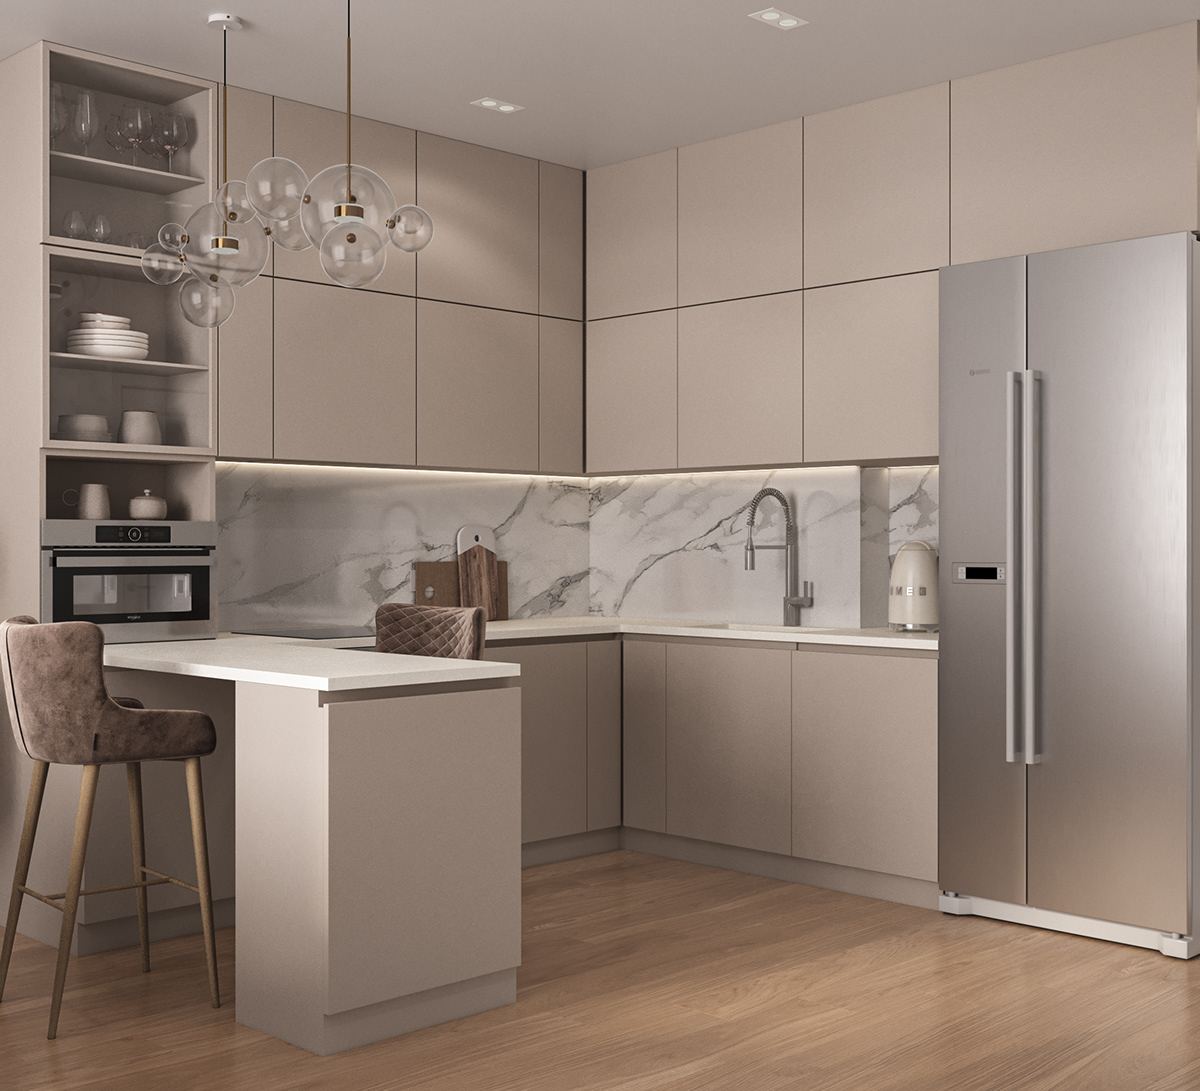 дизайн кухни  kitchen design visualization 3d Visualisation 3д визуализация 3д визуализатор дизайн интерьера interior design  Визуализация интерьера